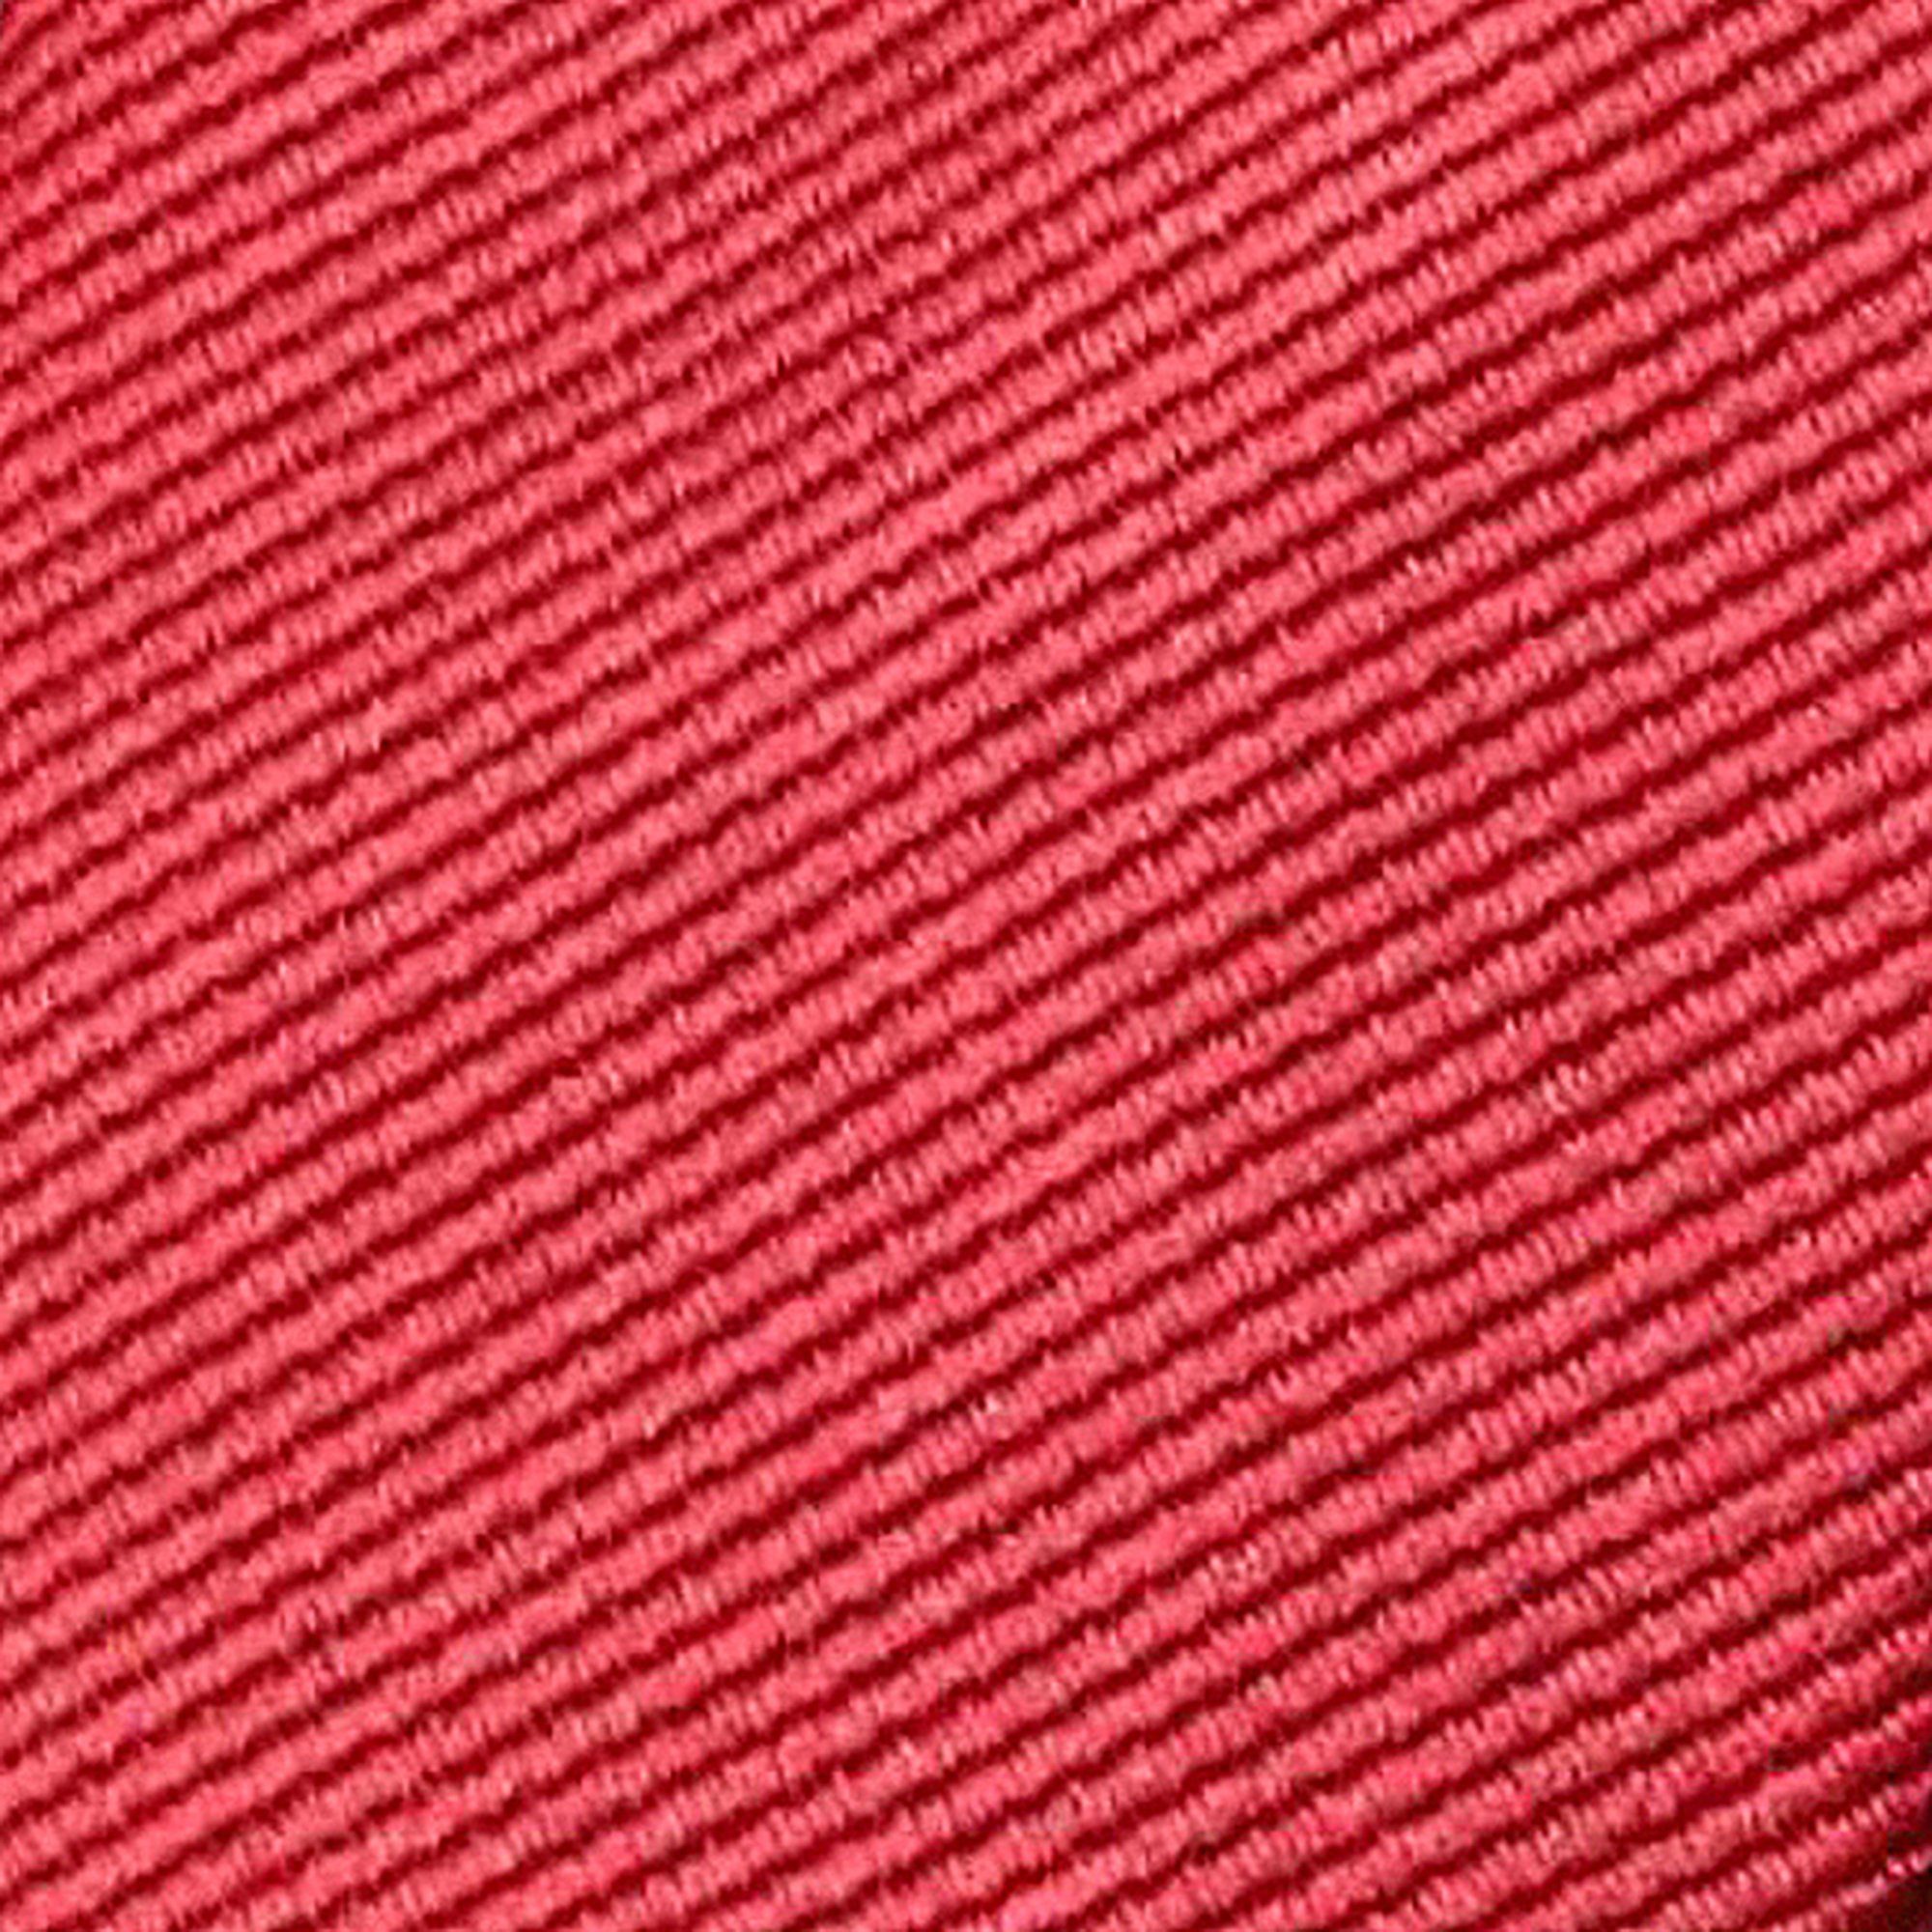 GASSANI Slim-Fit In Männer Dunkel-Rot mit Weinrot Krawatte Seide-Touch Bordeaux-Rot Rosen-Rot Streifen, Rippen Rips Dose Blech-Spardose, Gestreifte 2-St., Samt-Rot Schmale Feine Tiefrot Geschenkverpackung) Geschenk-Box (set, Männer-Schlips Herren-Krawatte Uni Business-Krawatte,